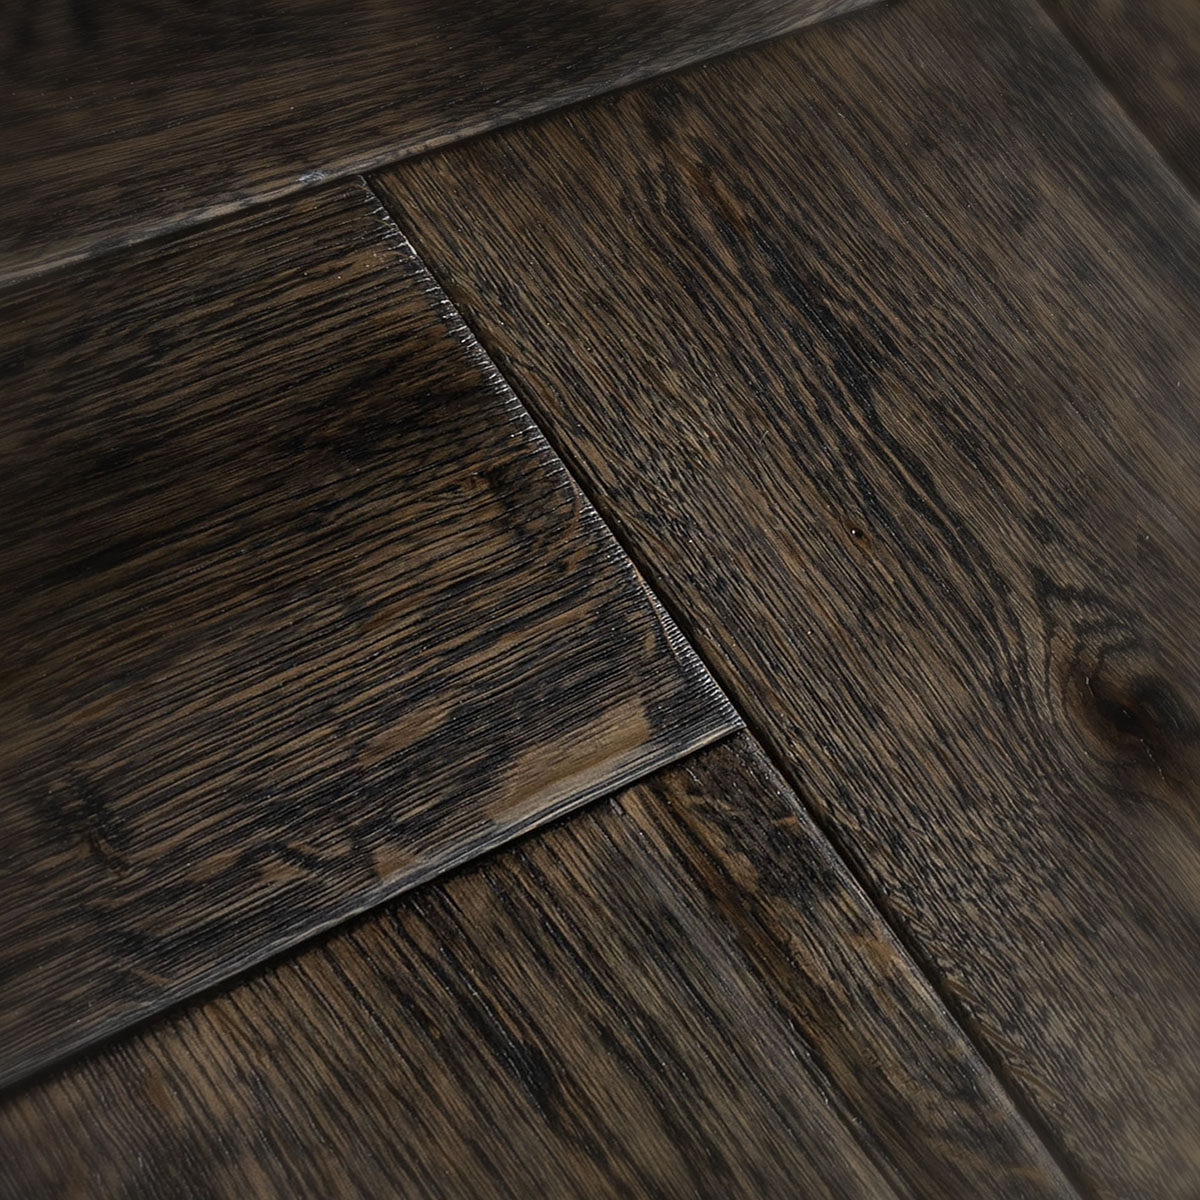 Cobbled Edged Oak Herringbone Floor 500mm x 120mm